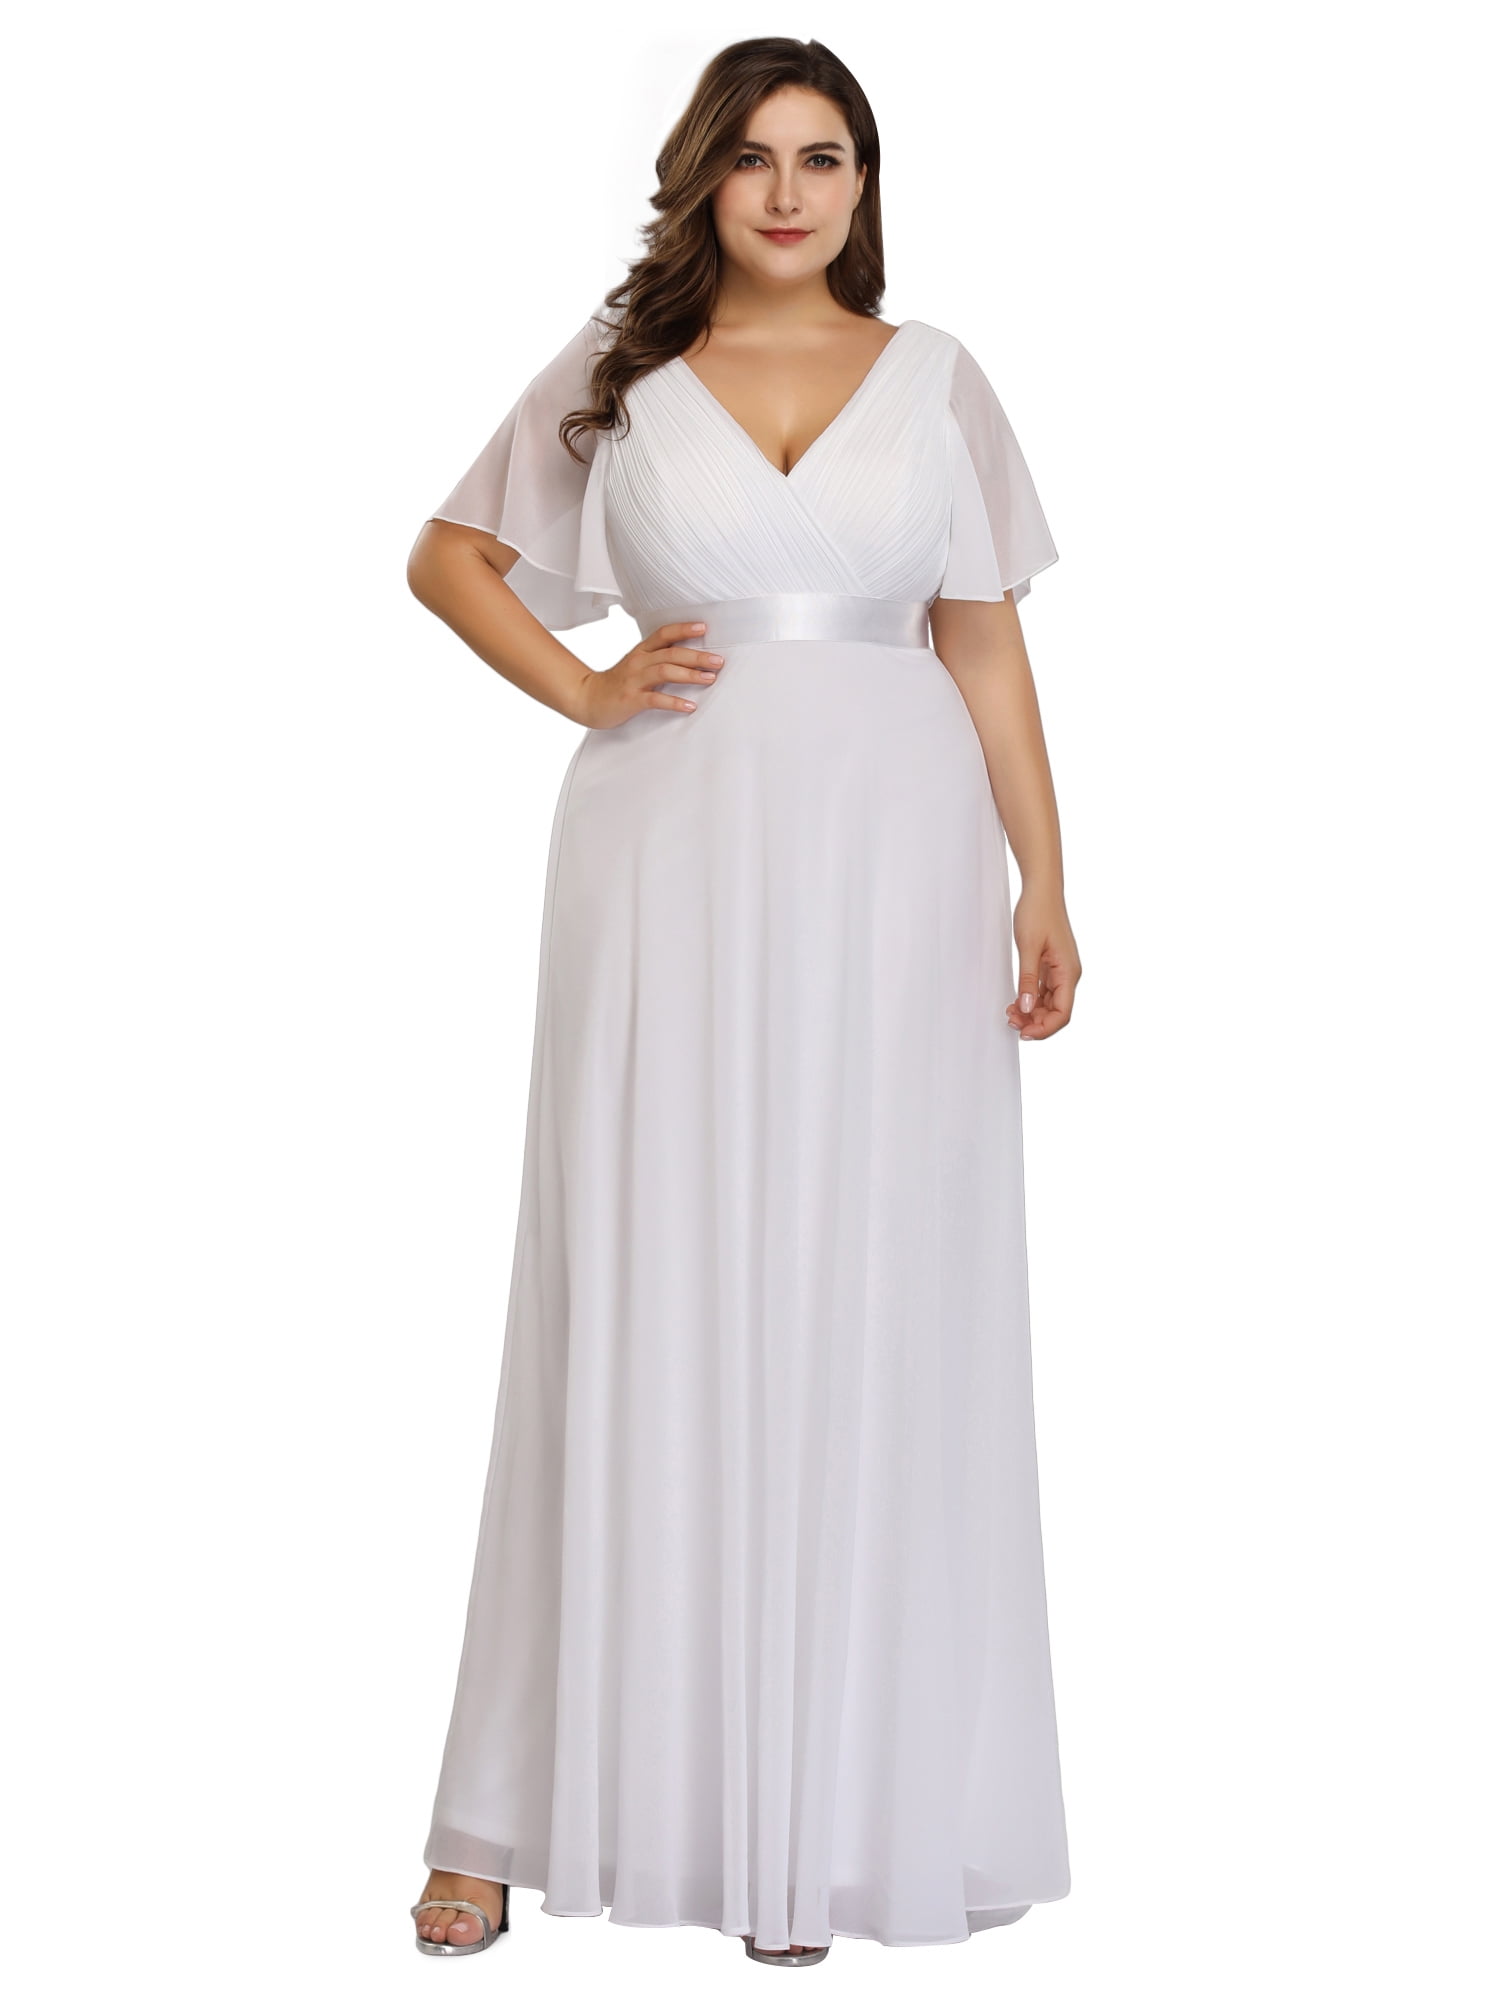 White Plus Size Prom Dresses